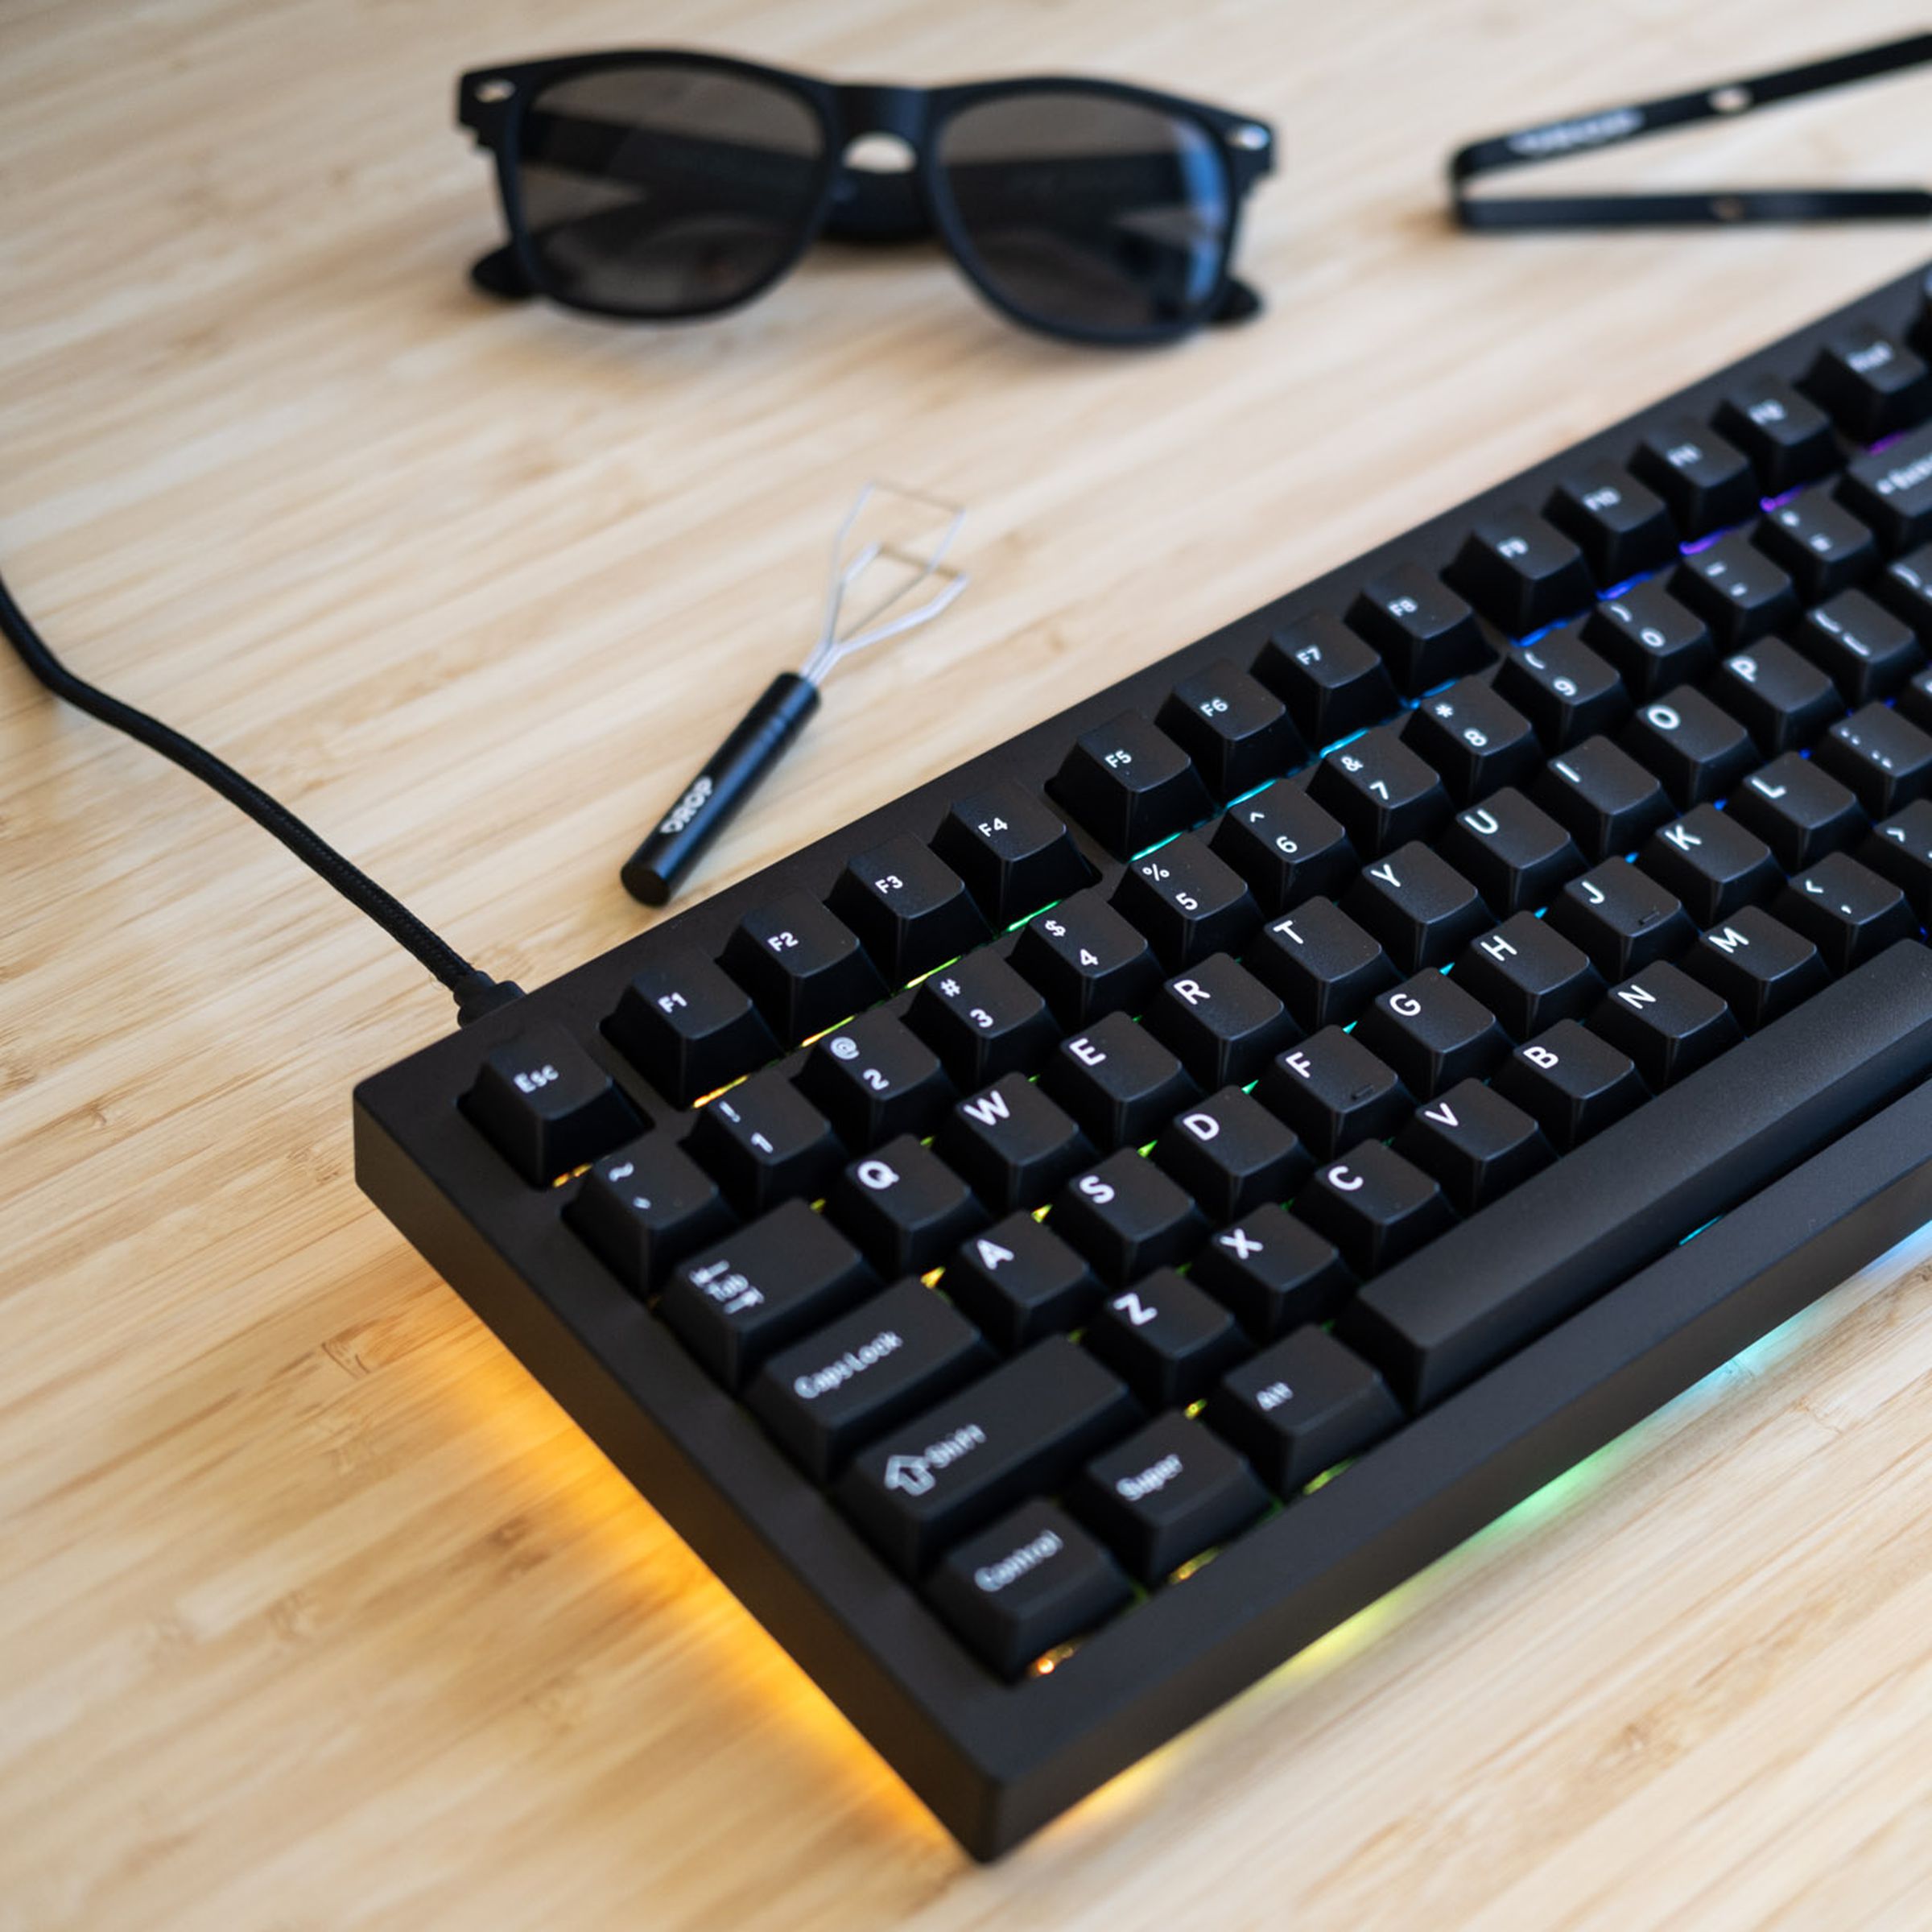 Sense 75 keyboard on a desk.